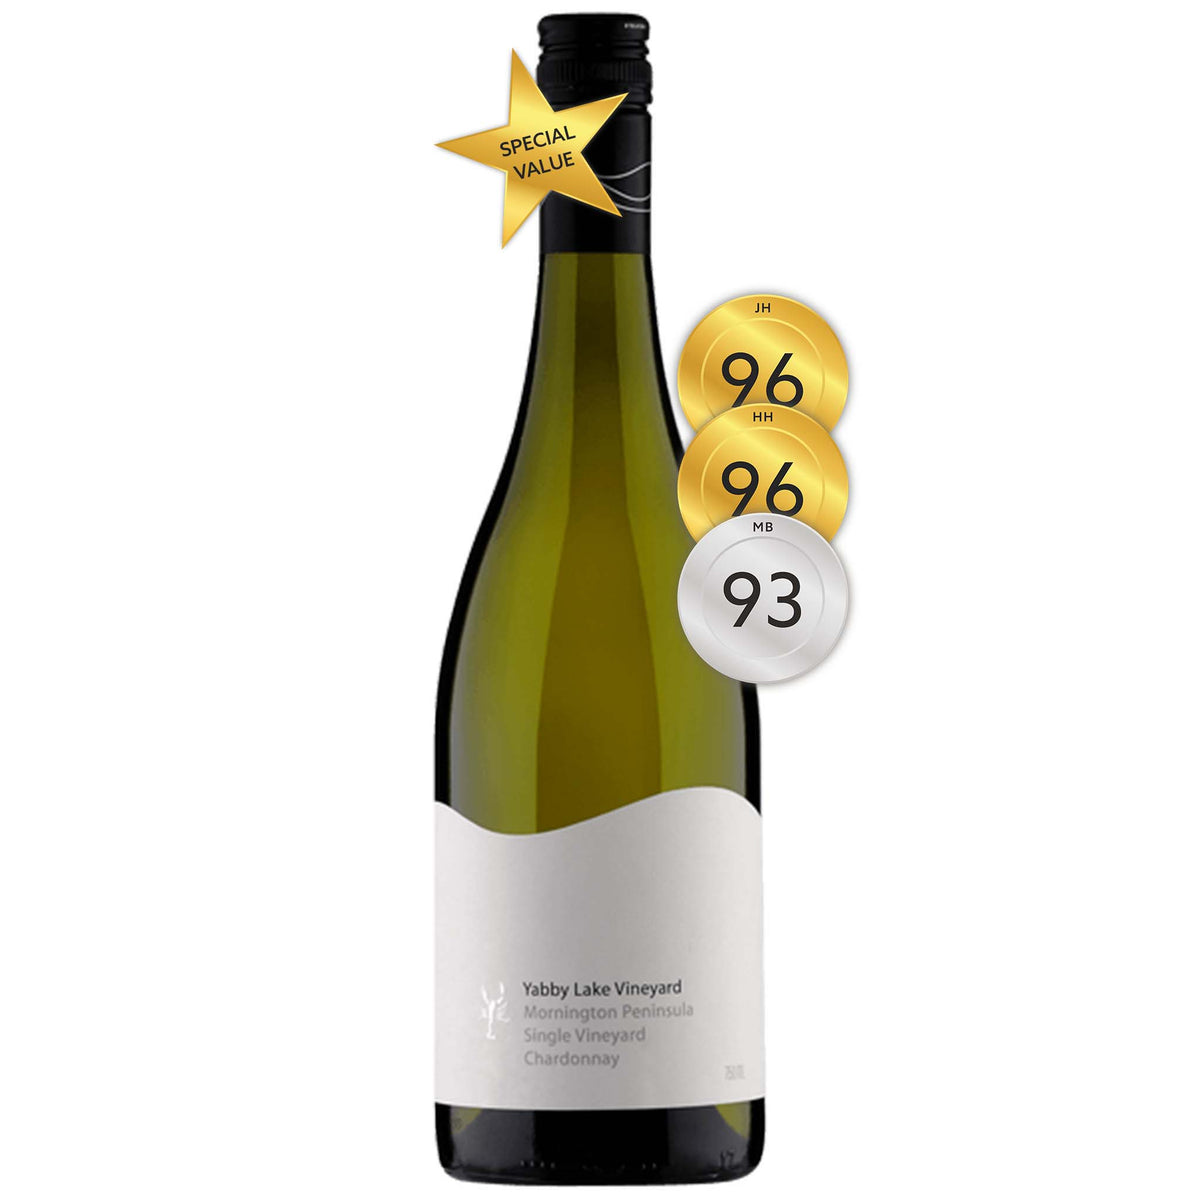 Yabby Lake Single Vineyard Chardonnay 2015